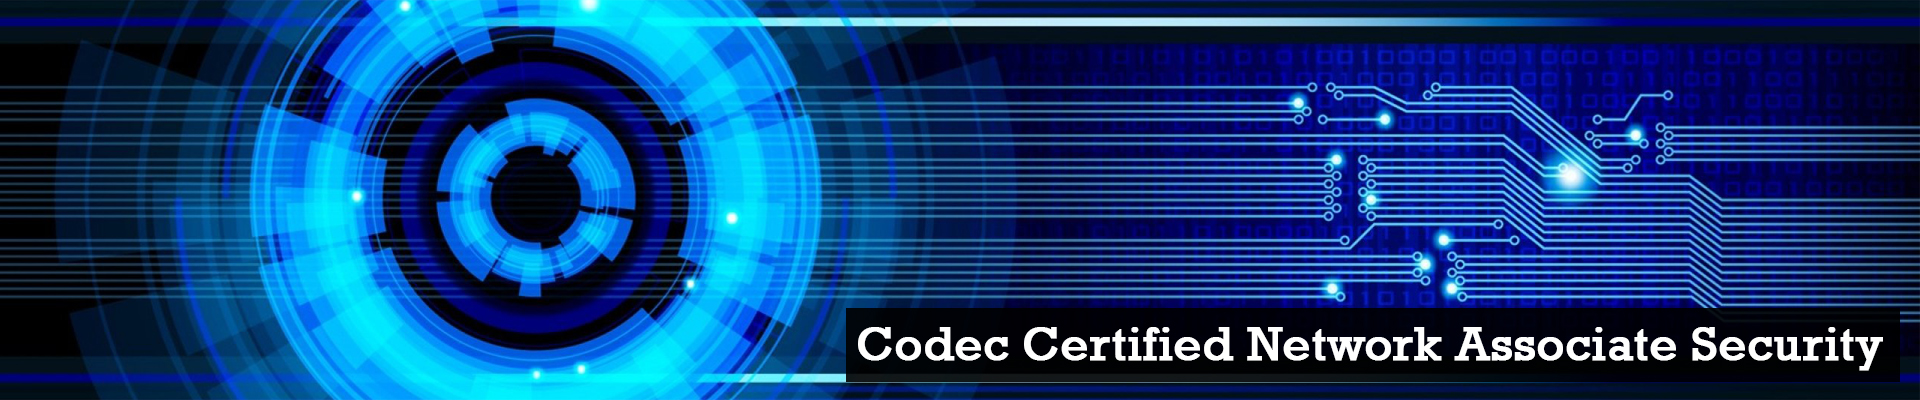 CISCO-Certified-Network-Associate-CCNA-Security-Training-Certification